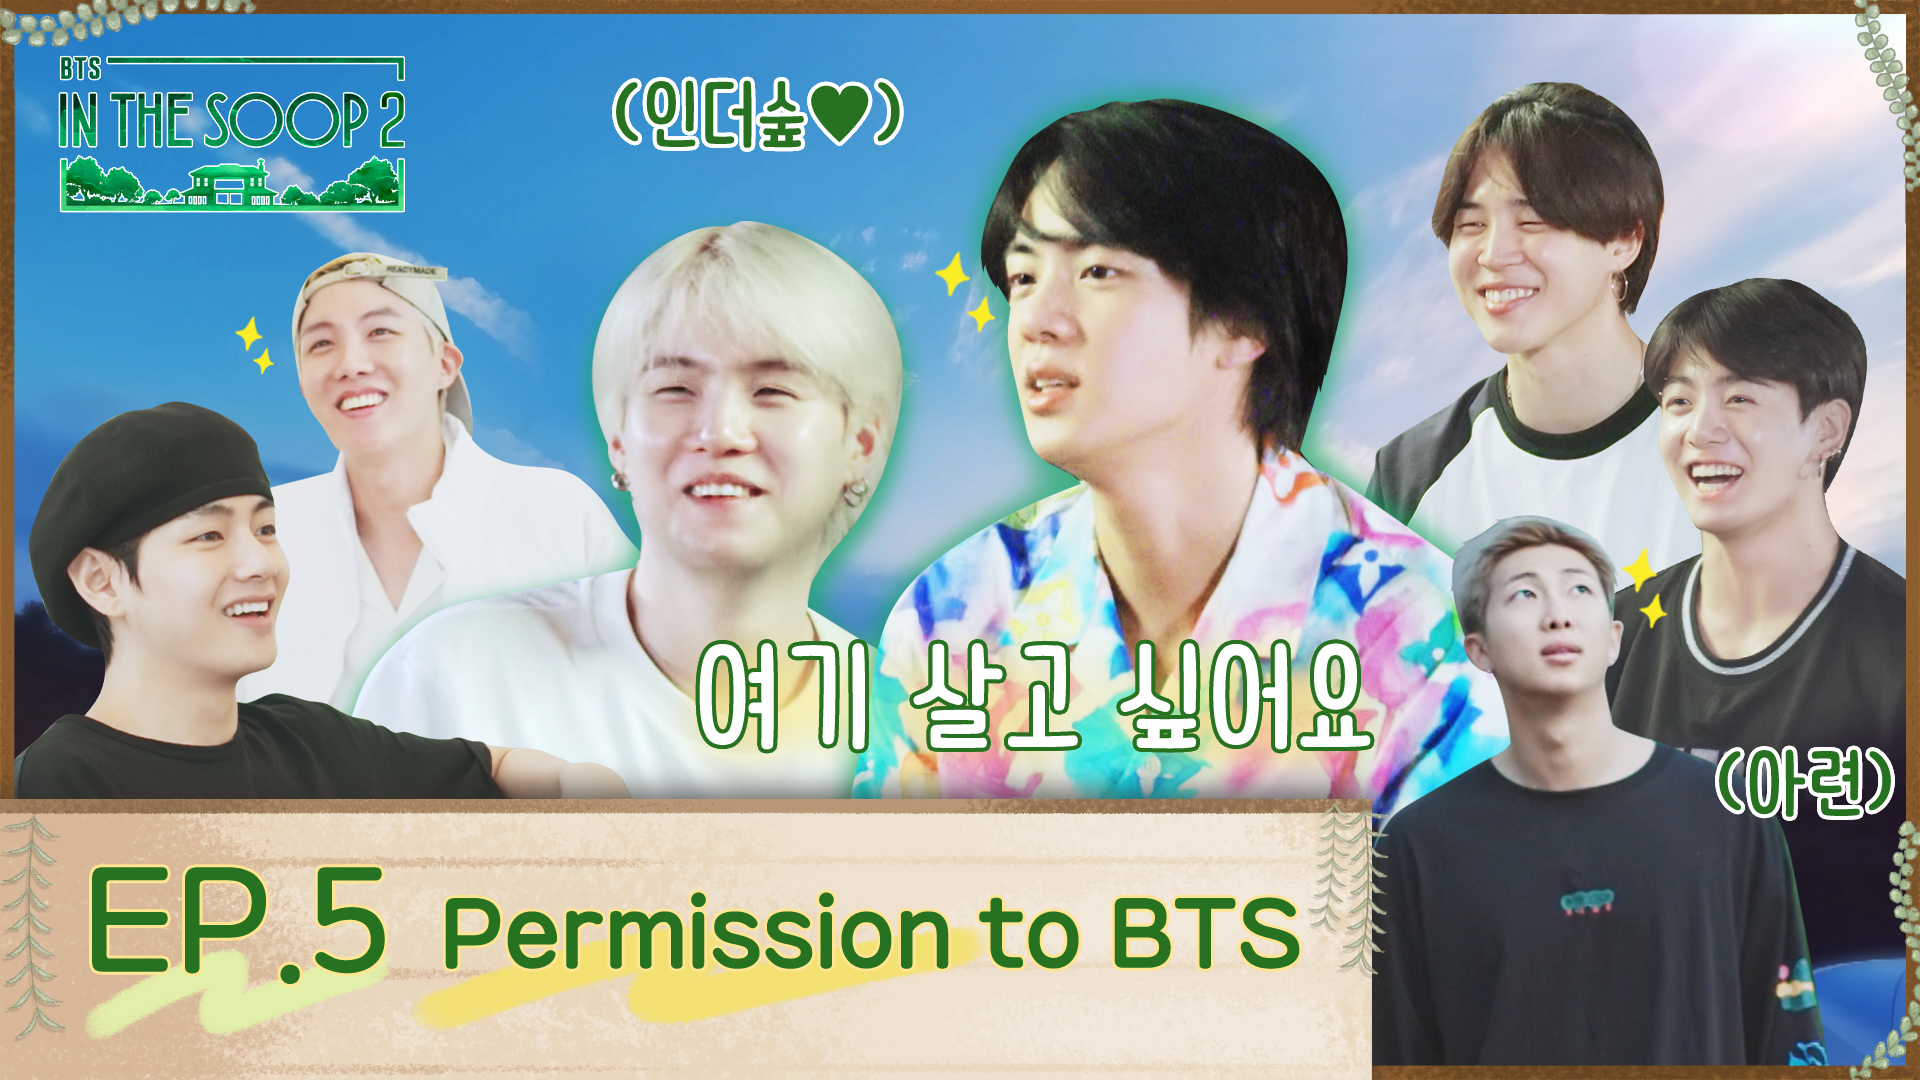 BTS In the SOOP Season 2 Episode 1